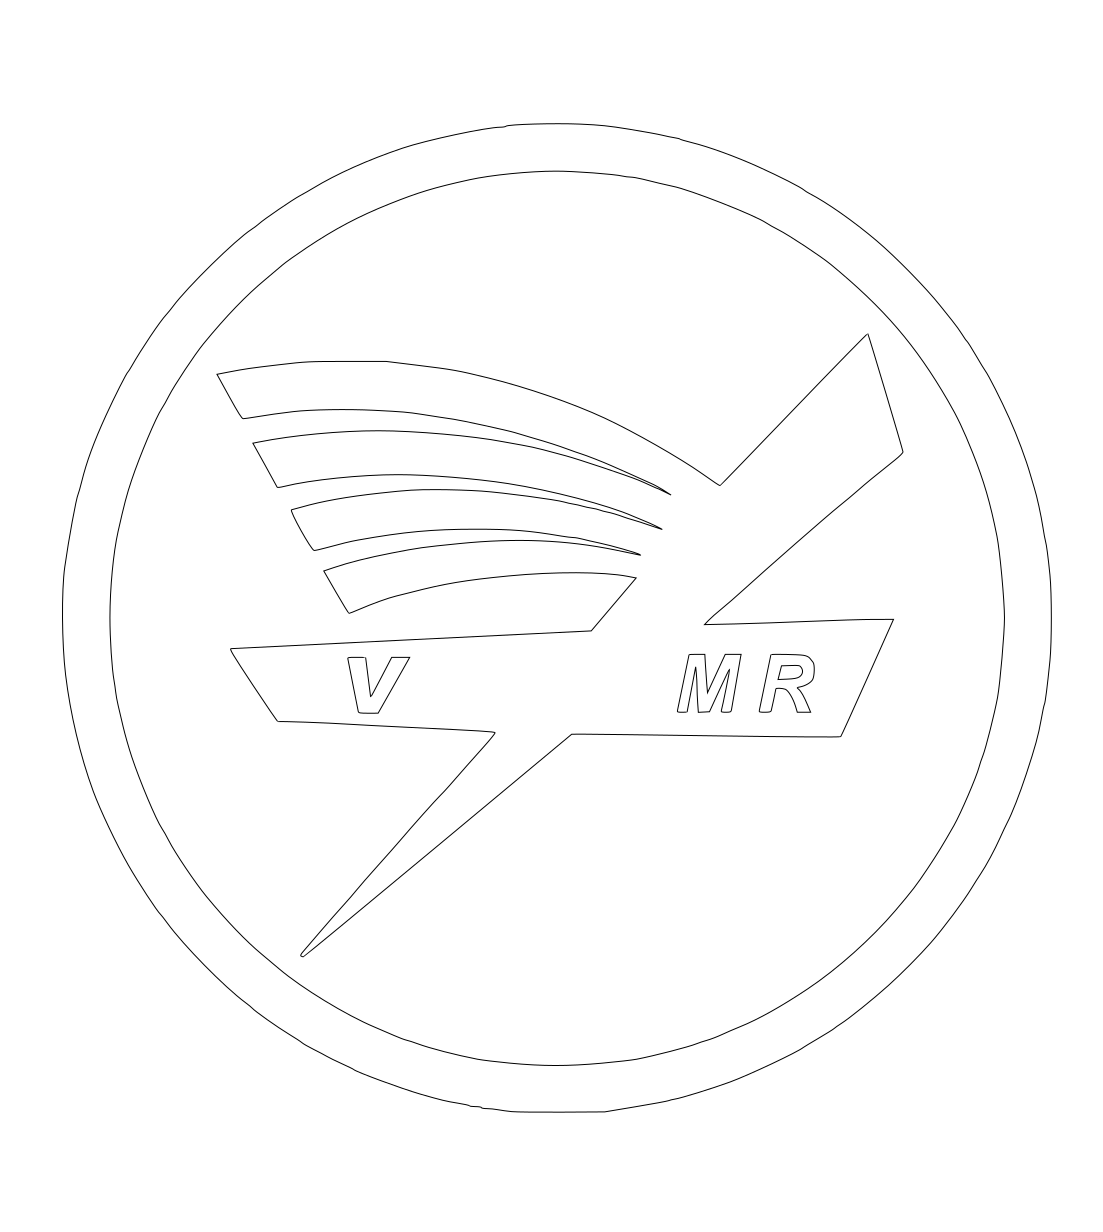 Vereinigung für Modellflugsport Regensburg e.V.